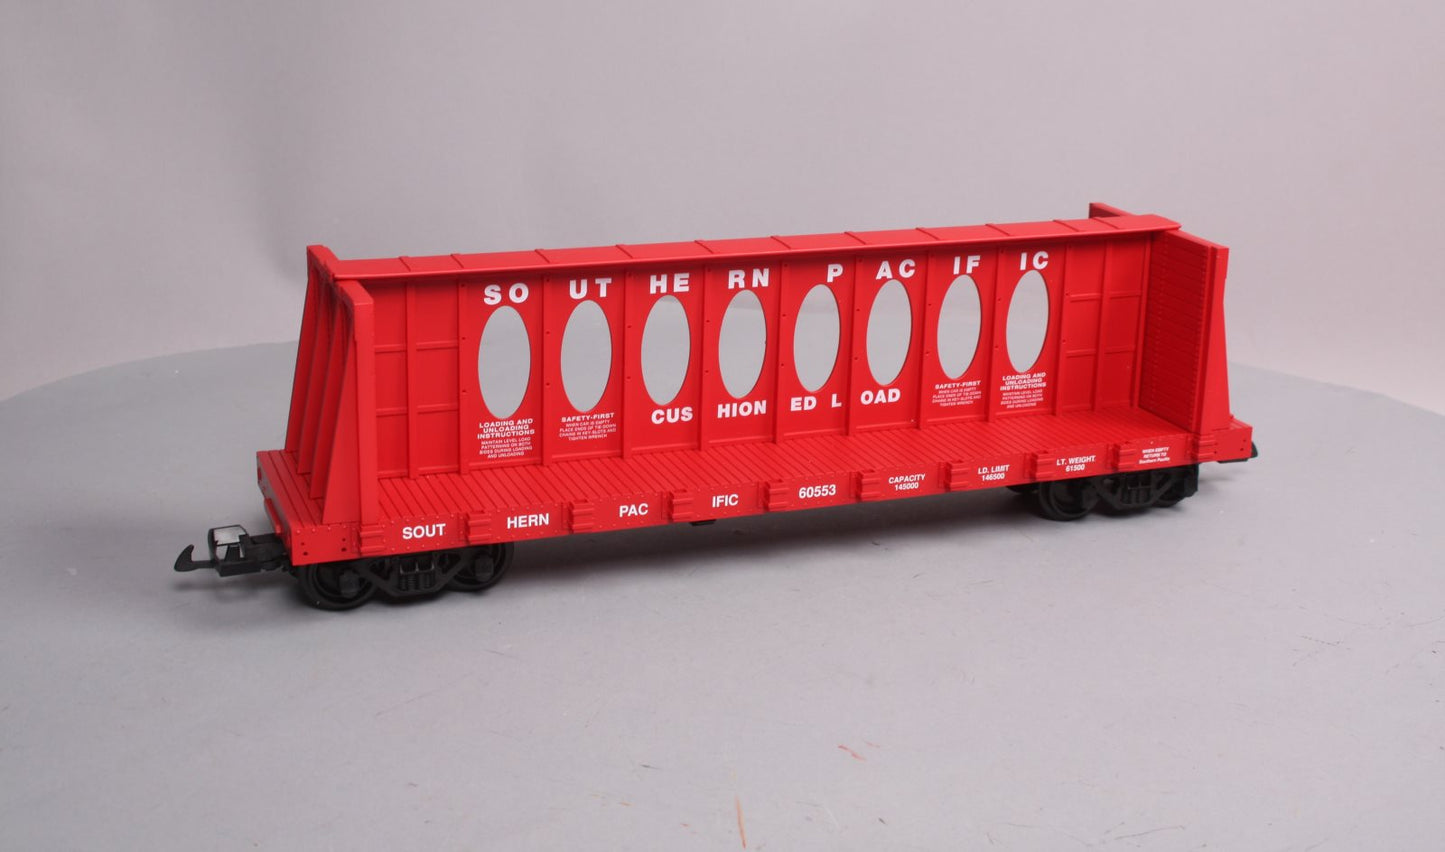 USA Trains R17404 USA Trains 17404 Southern Pacific Centerbeam Flatcar Red